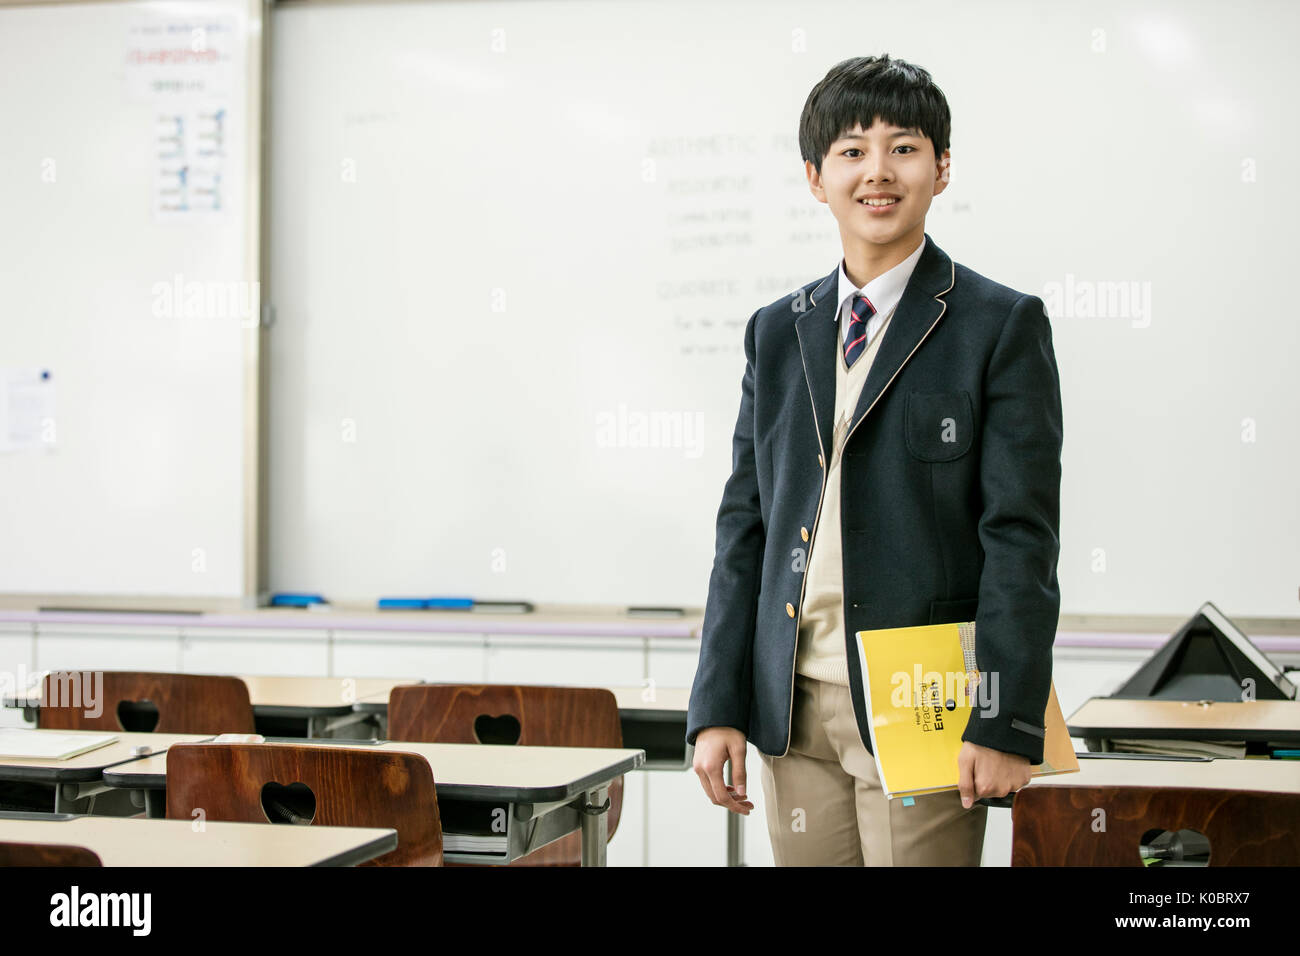 Smiling school boy standing in classroom Stock Photo